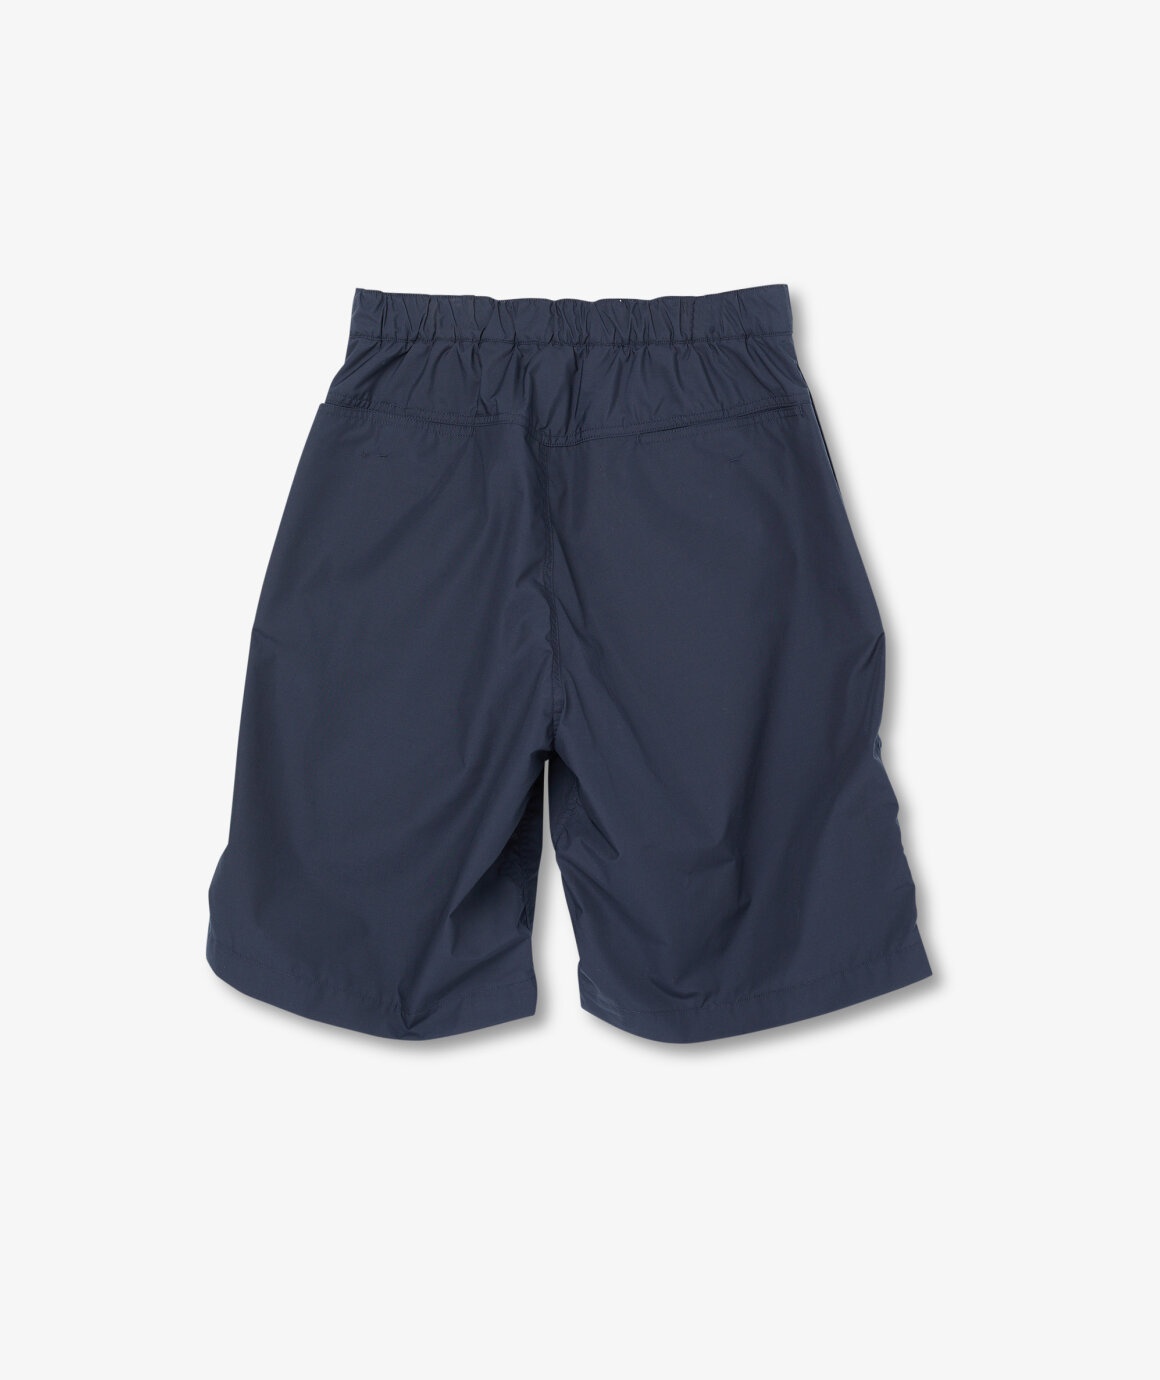 Deck Shorts - 2